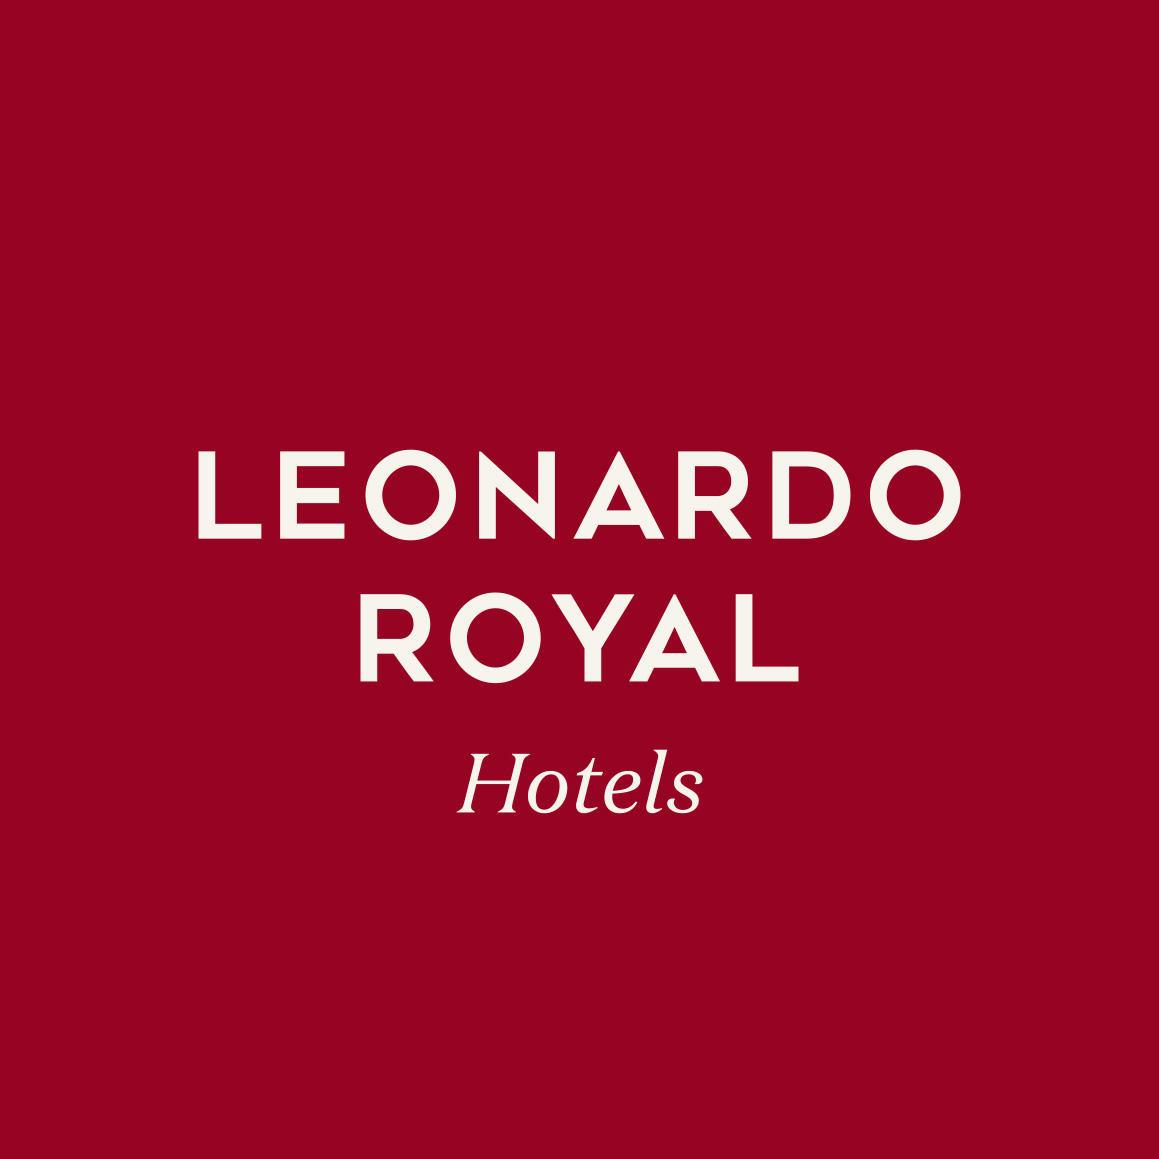 Leonardo Royal Hotel Edinburgh Haymarket Logo